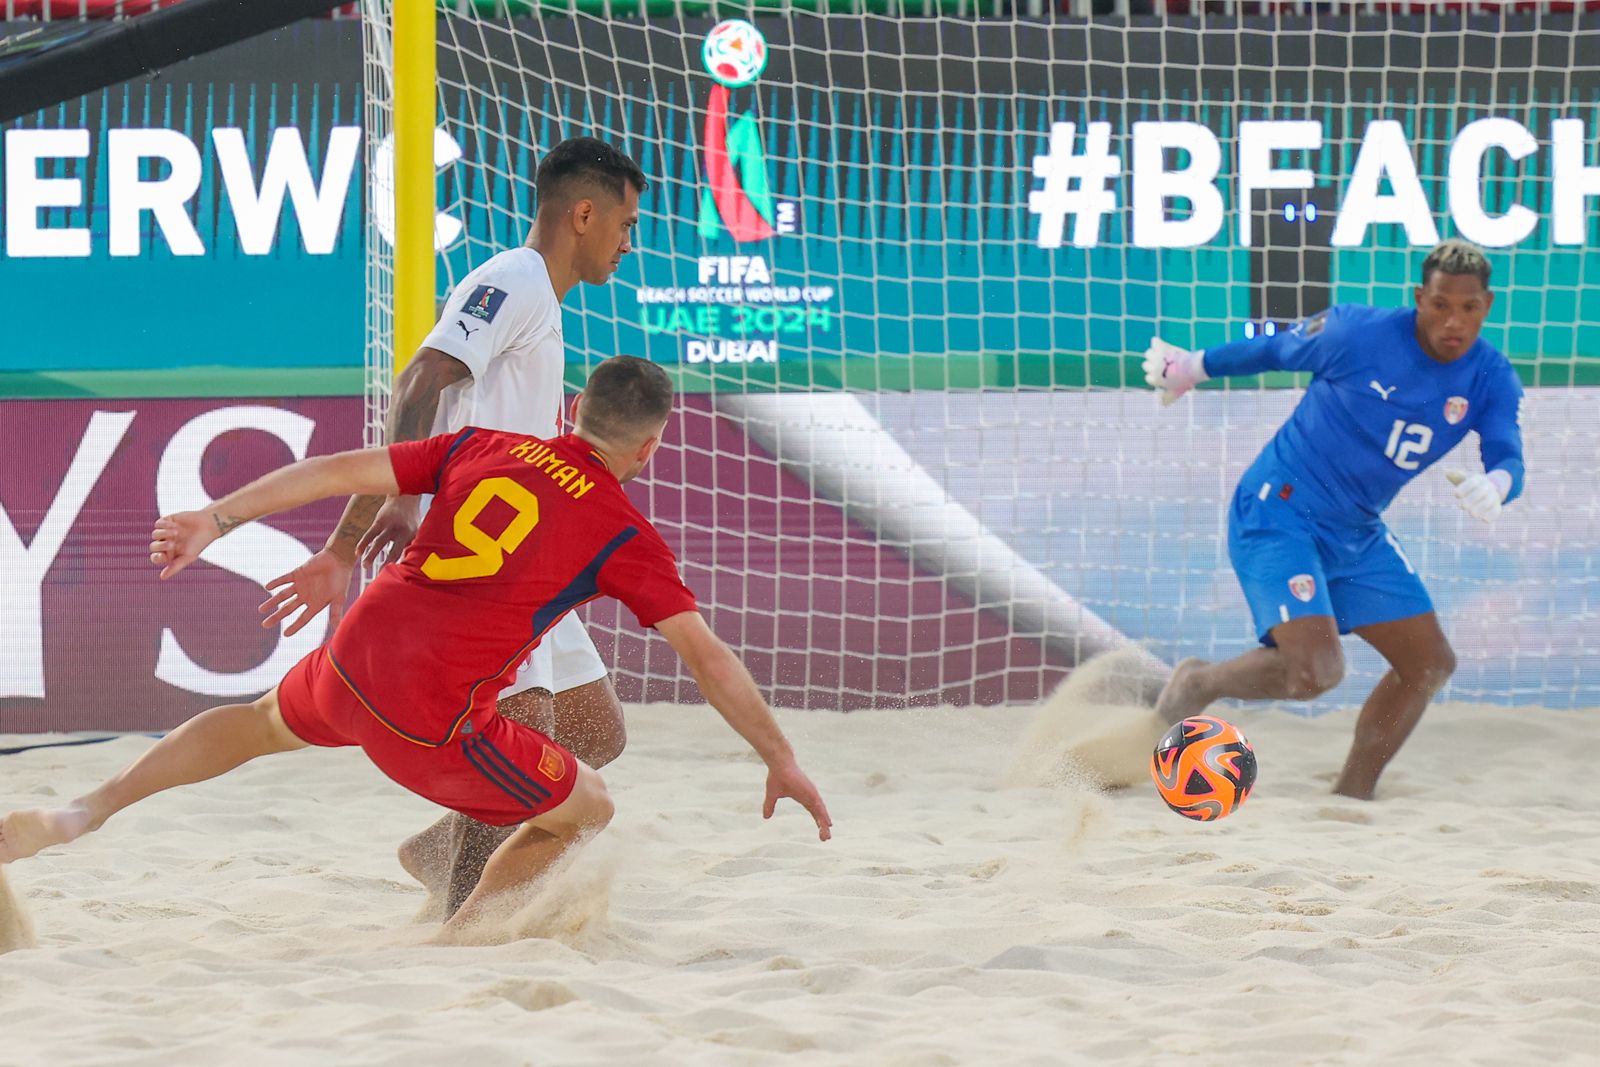 fifa beach soccer world cup - uae 2024: tahiti overcome spain, advance to quarter-finals